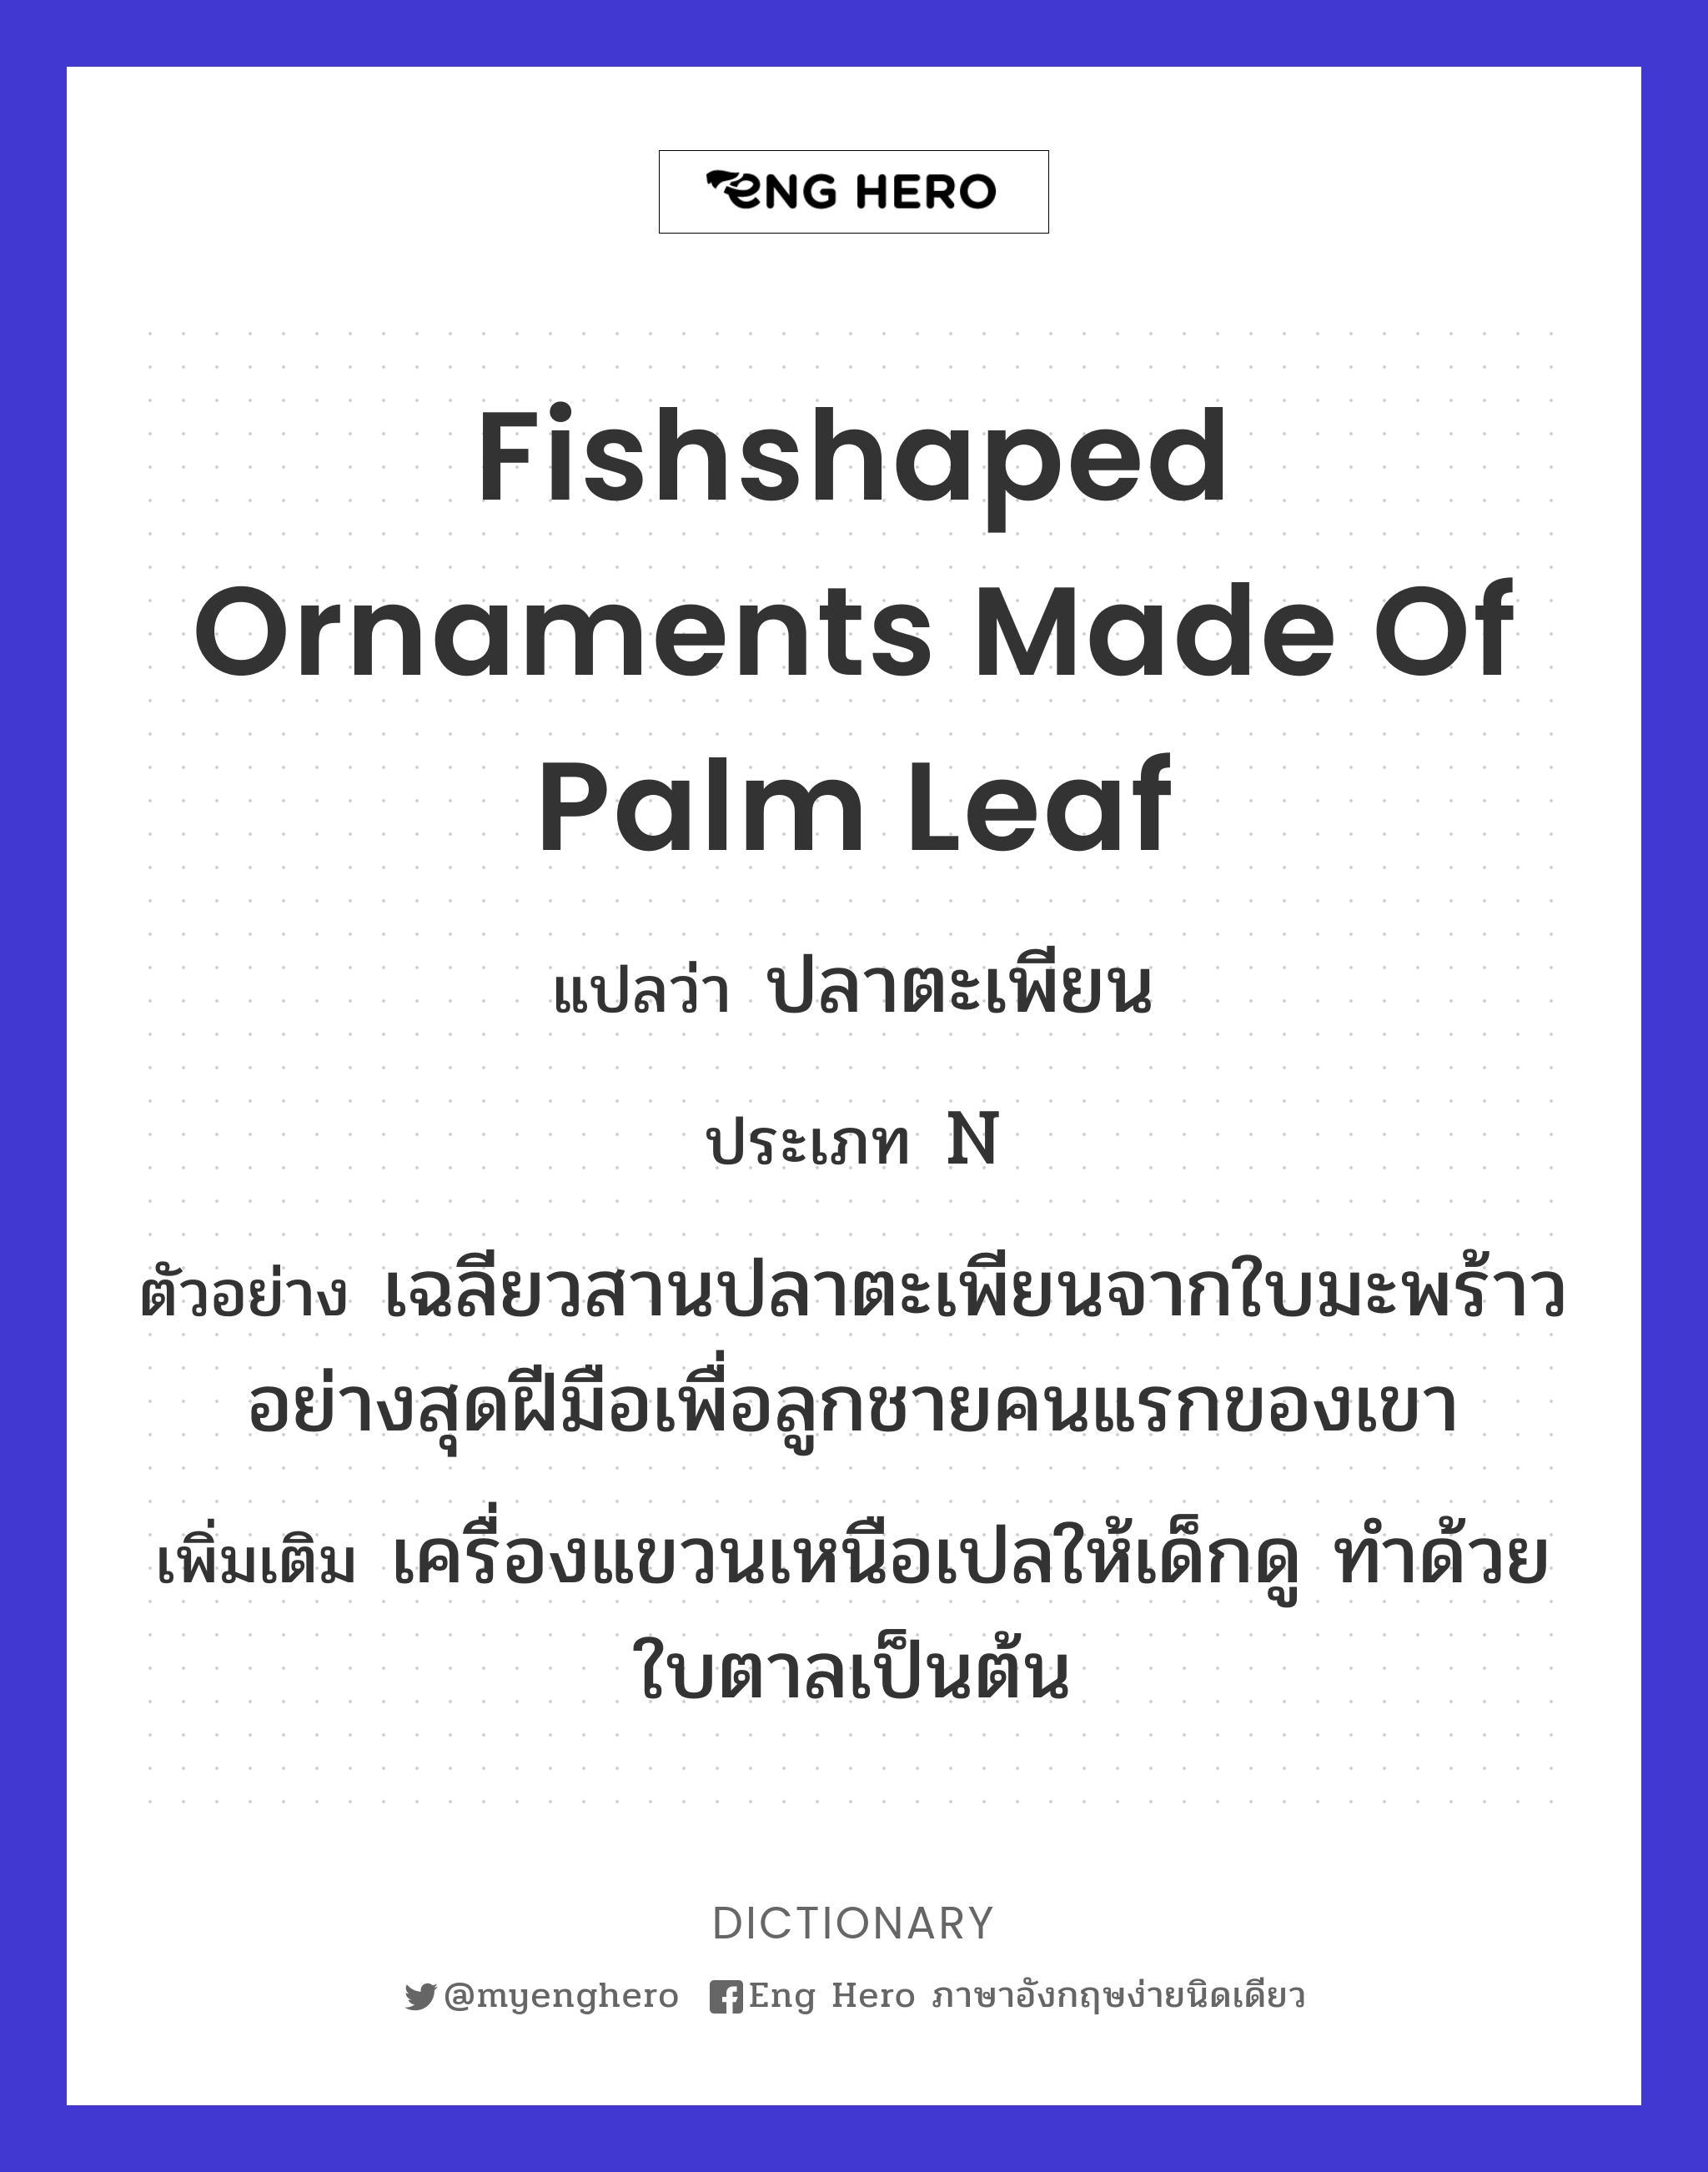 fishshaped ornaments made of palm leaf